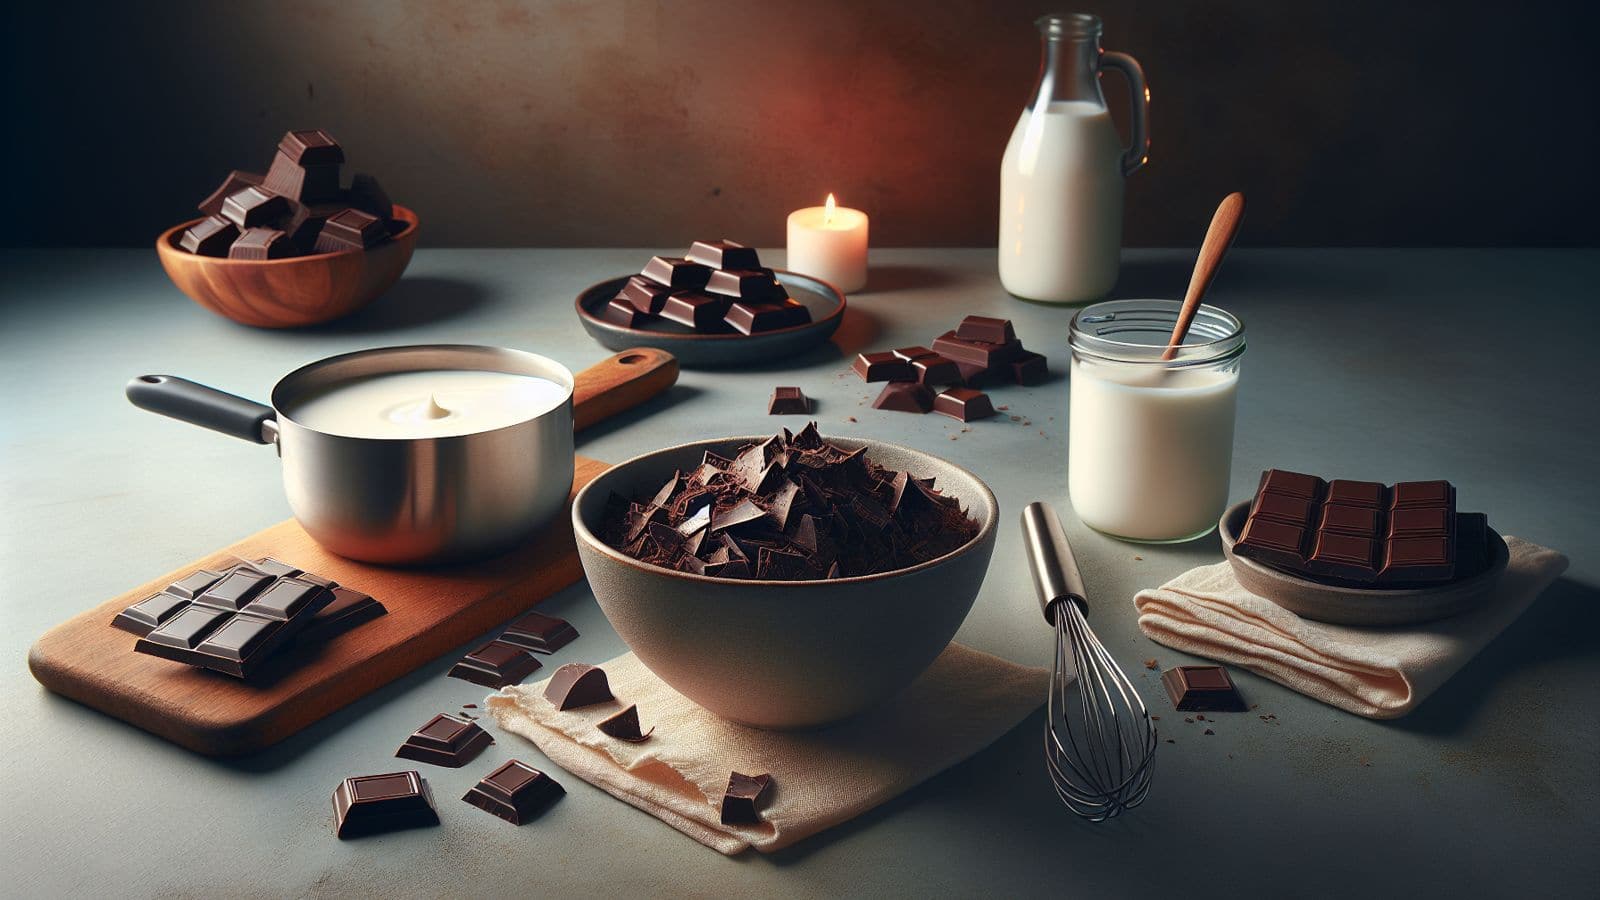 You will enjoy making this heavenly vegan chocolate ganache